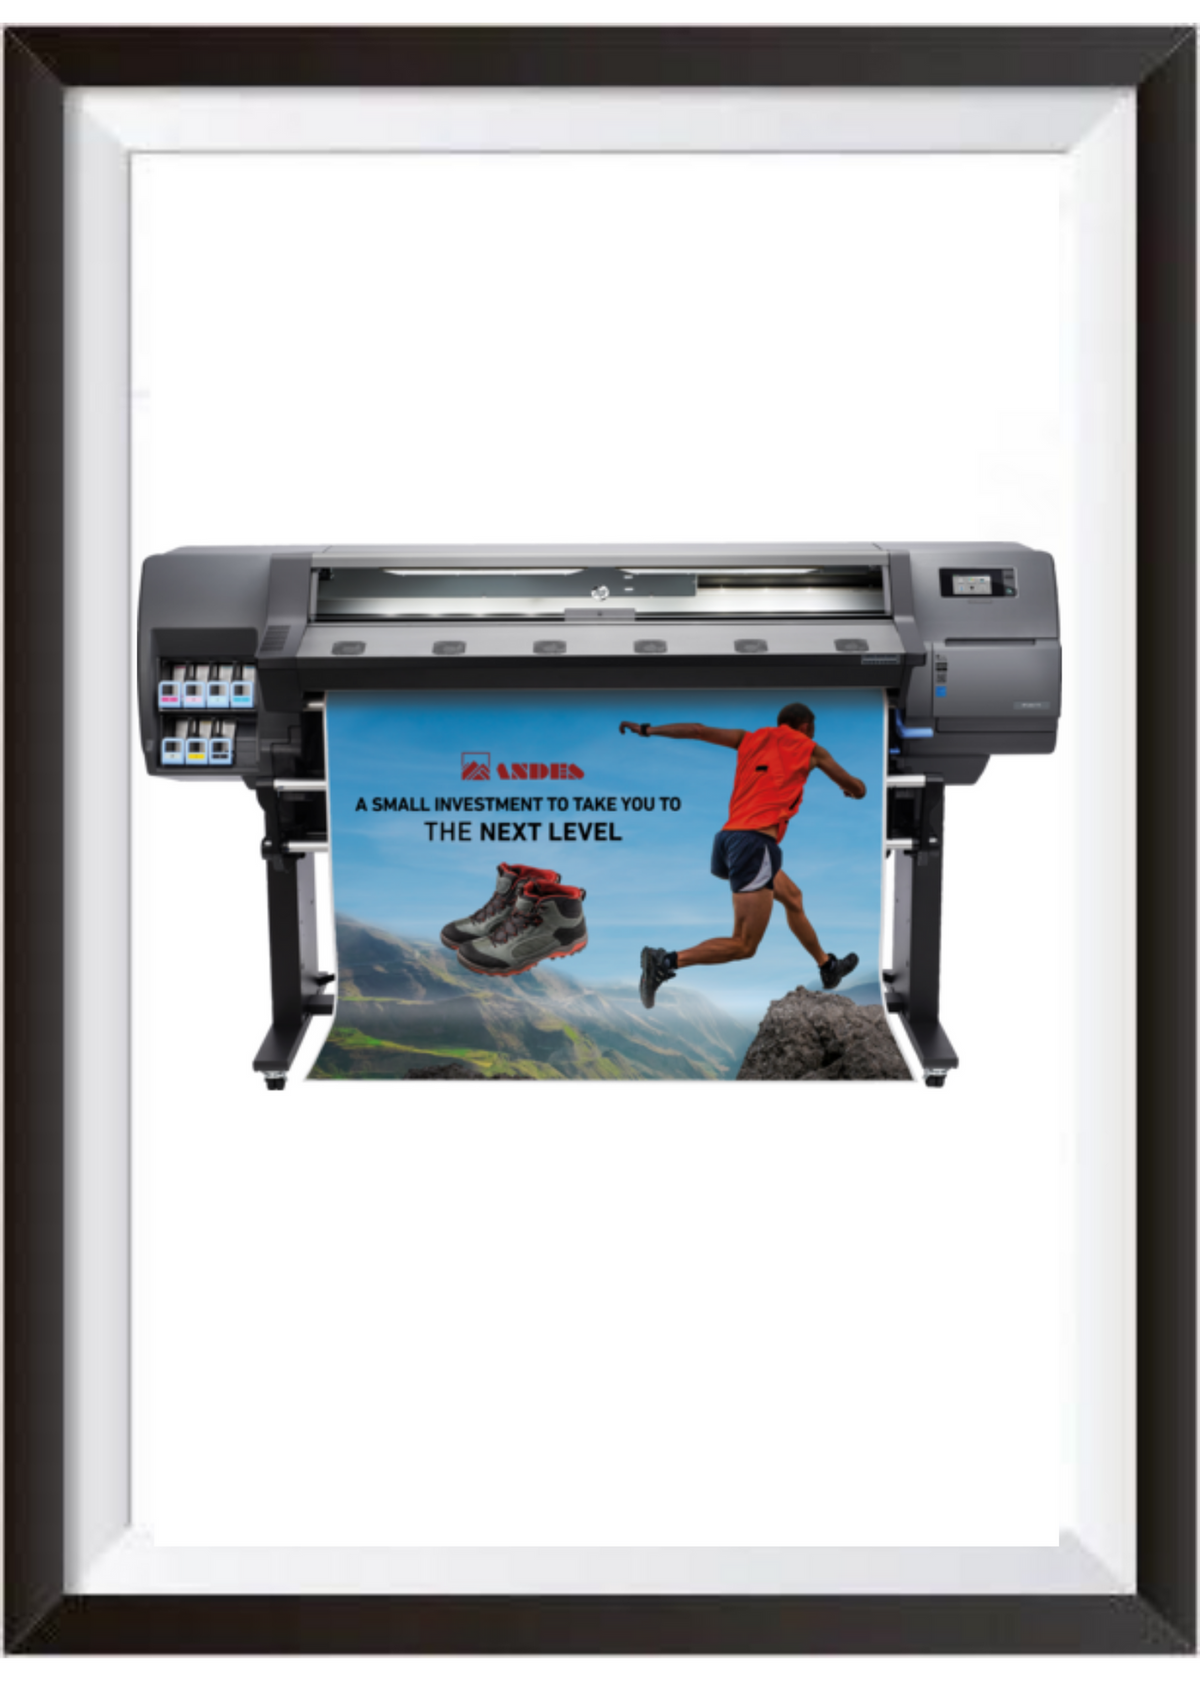 HP 115 Latex Printer - Refurbished + 1 Year Warranty - Wide Image Solutions